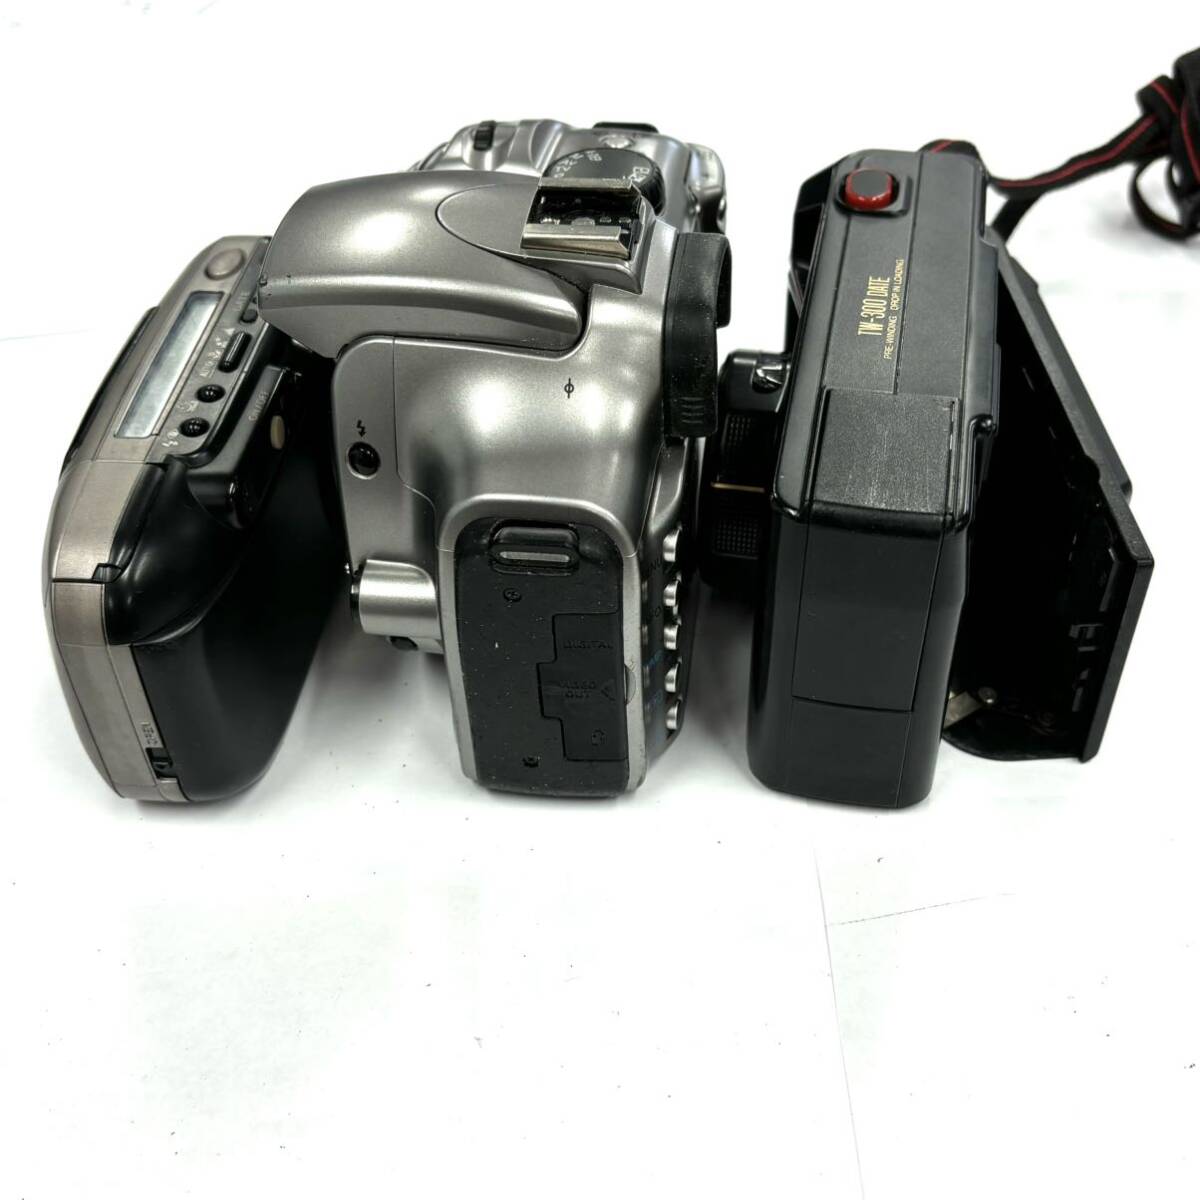 H2906 カメラ まとめ フィルムカメラ デジタルカメラ Canon キヤノン EOS Kiss DS6041 FUJI TW-300 DATE MINOLTA ミノルタ Capios25 中古の画像5